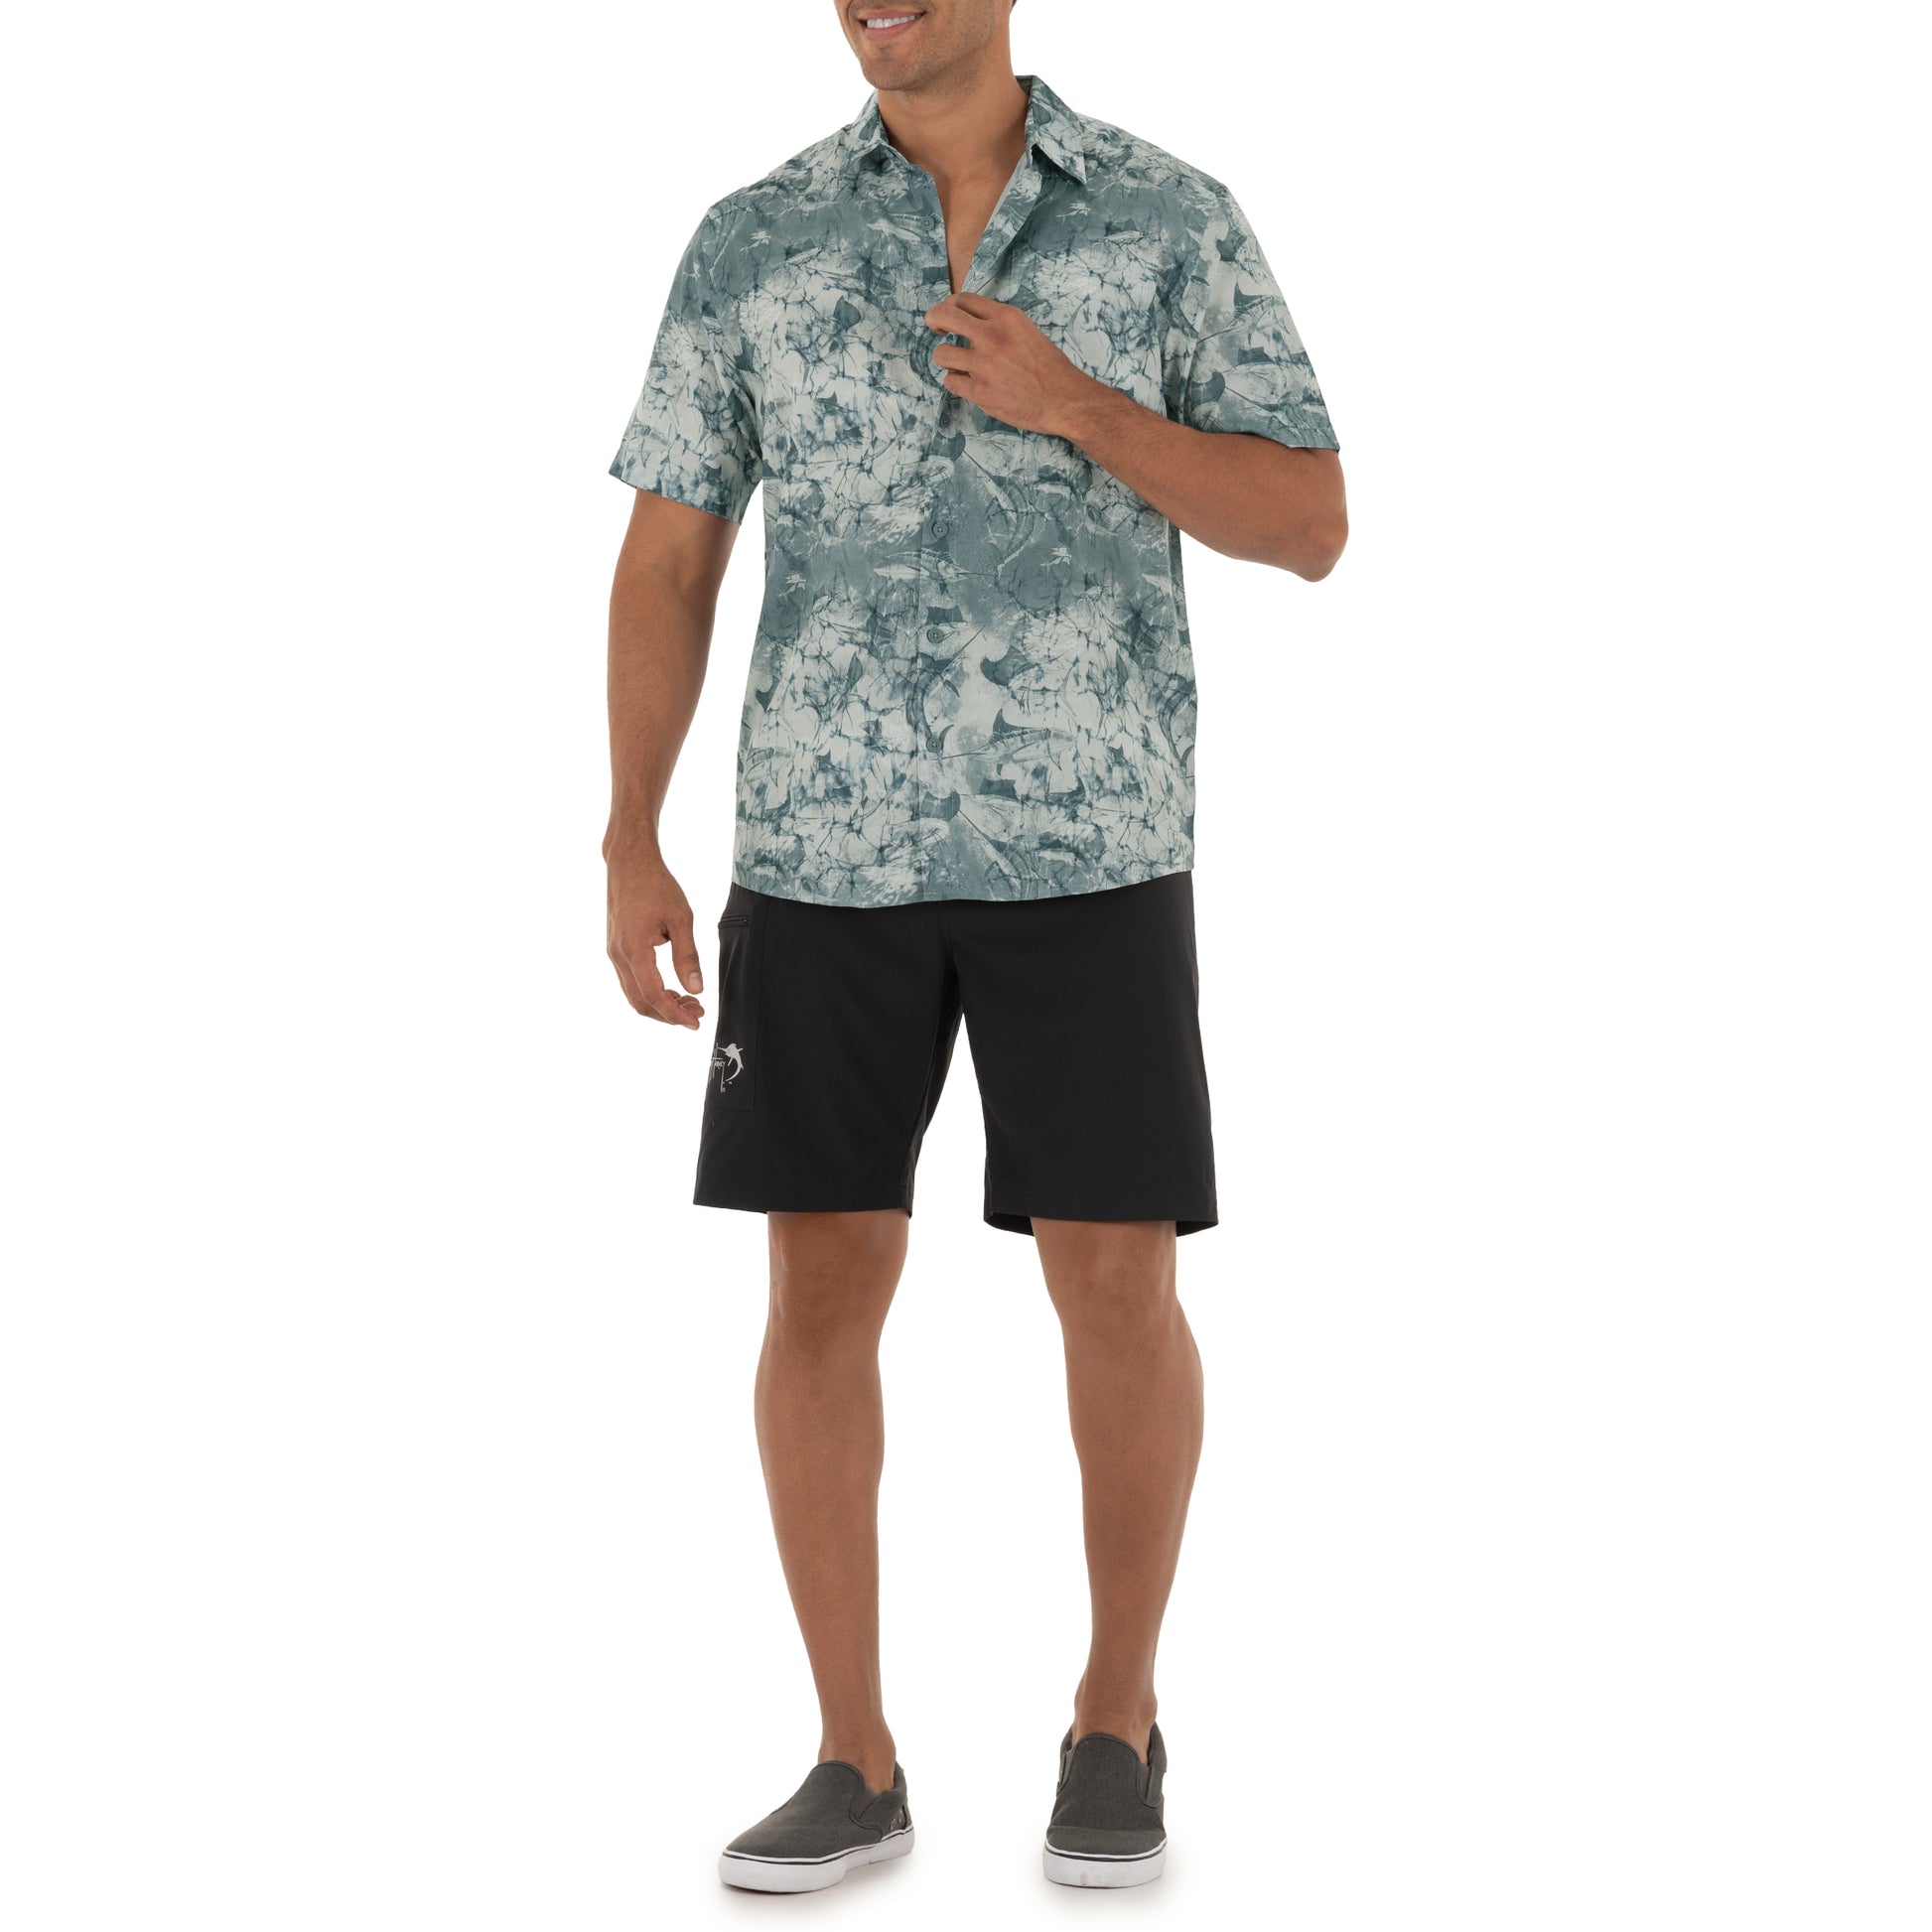 Men's Short Sleeve Printed Grey Fishing Shirt View 3